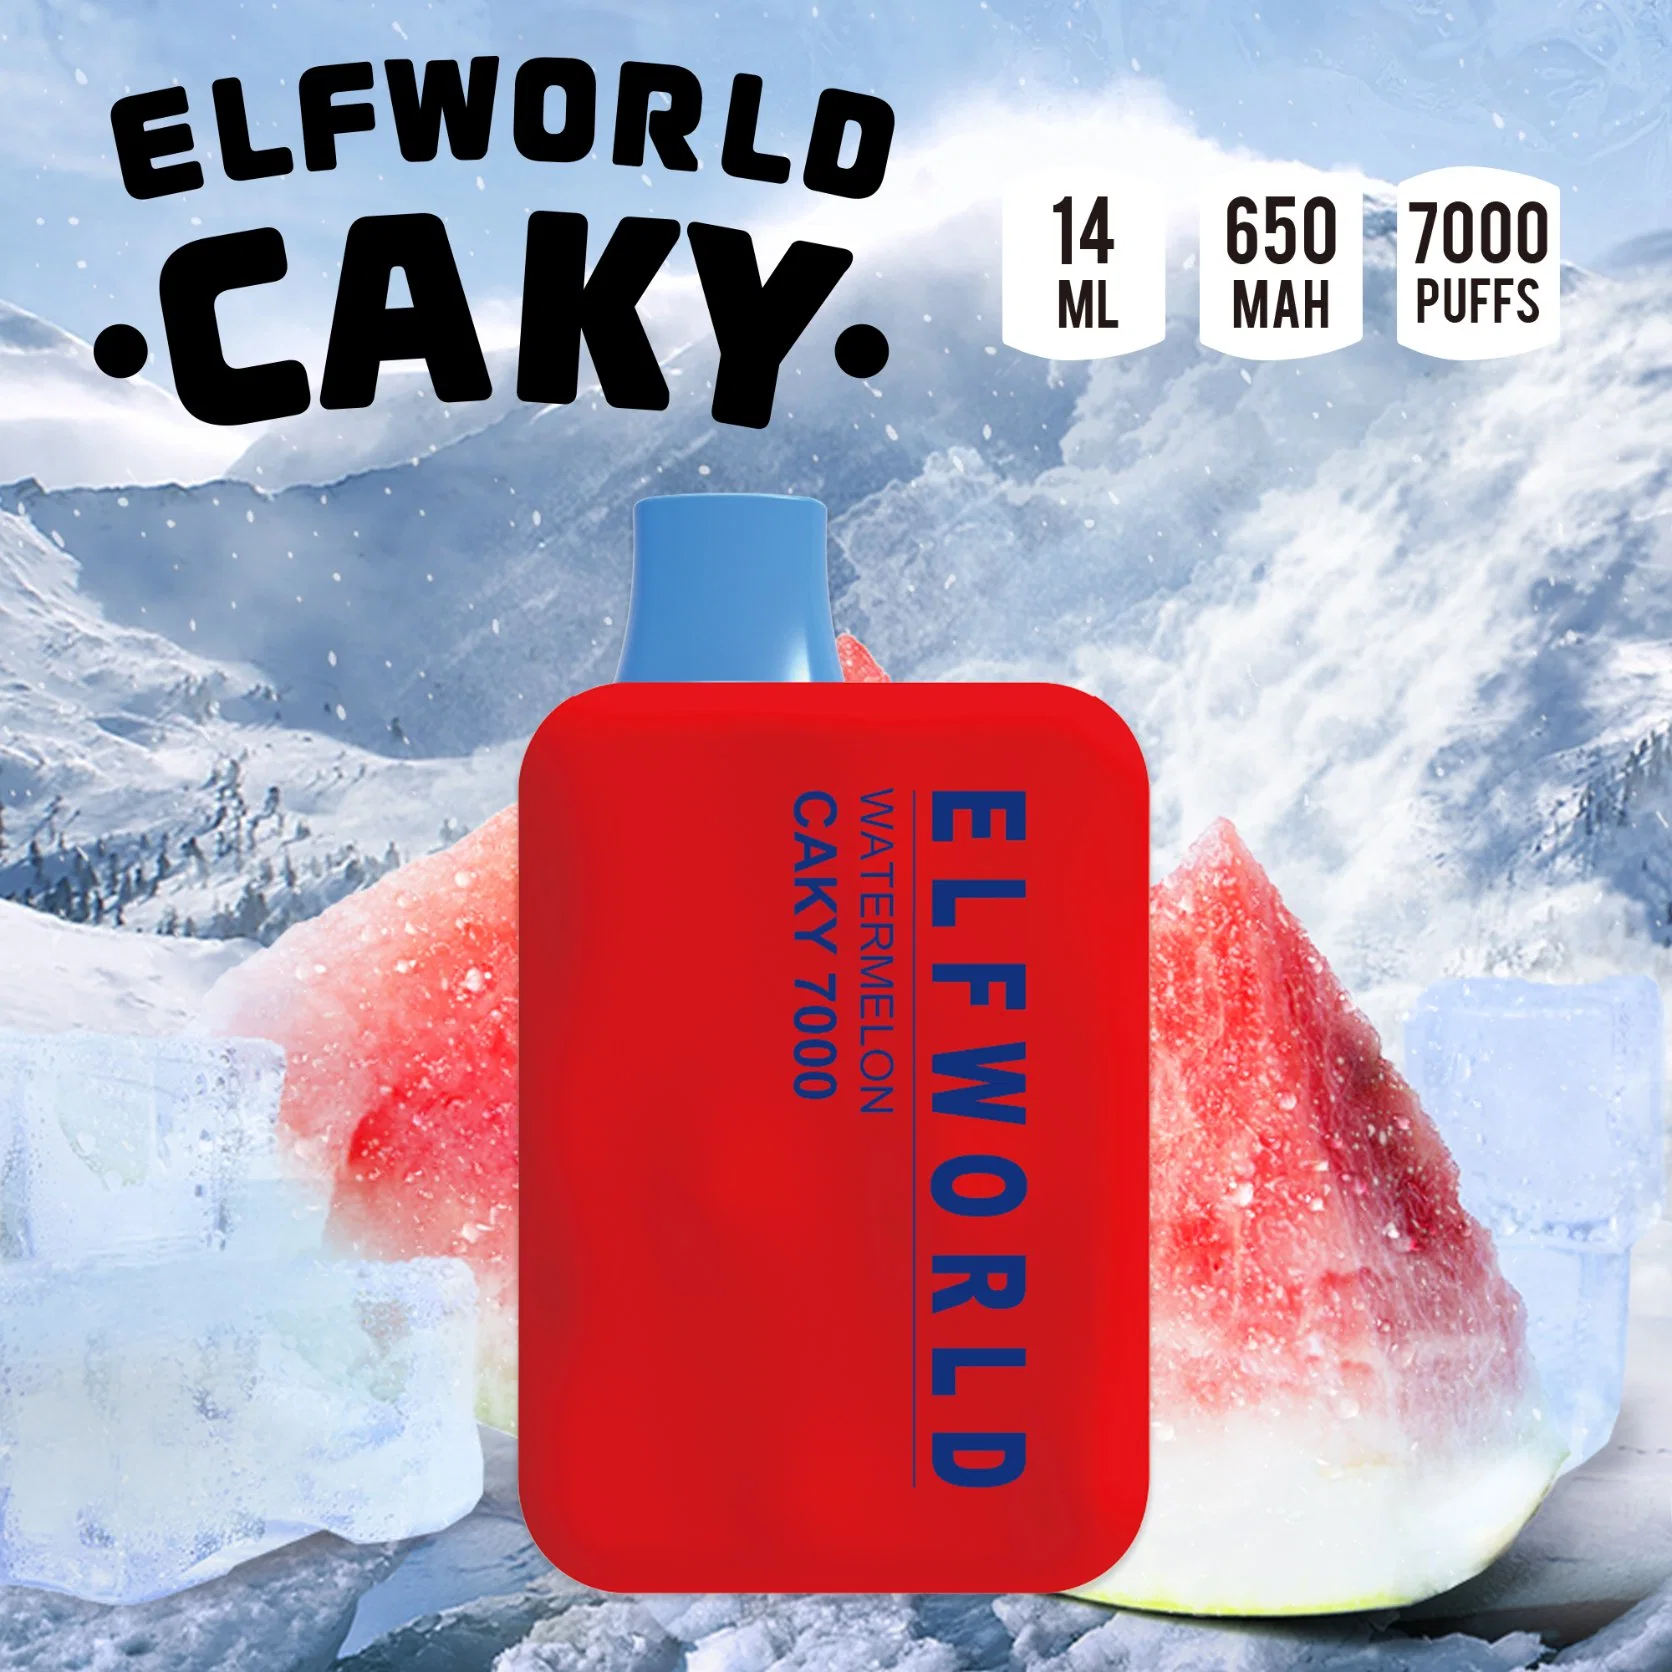 Zbood Personalisieren Elfworld Caky 7000 Beste 5000 Puff Nebel Raz Mc8 Ecigarette Vaporizer Vape